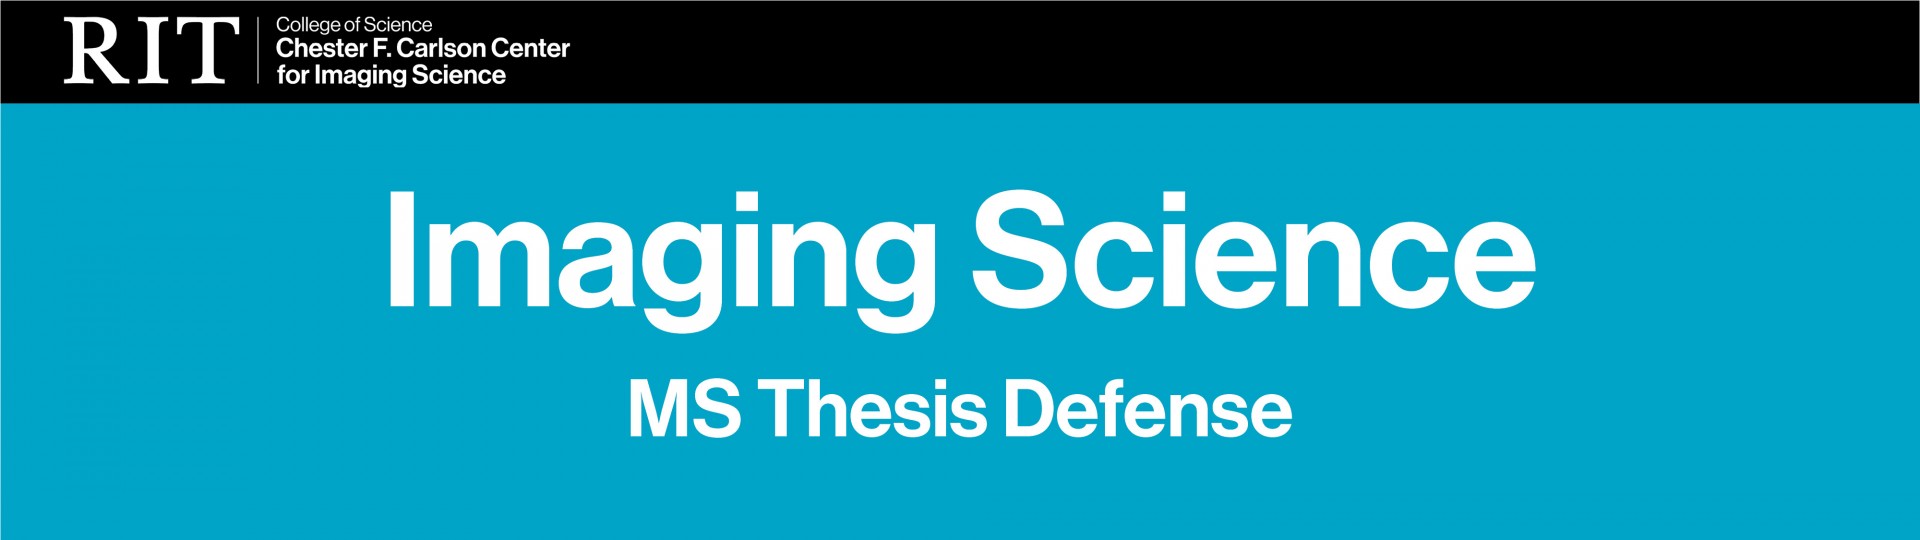 imaging science ms thesis defense rachel golding